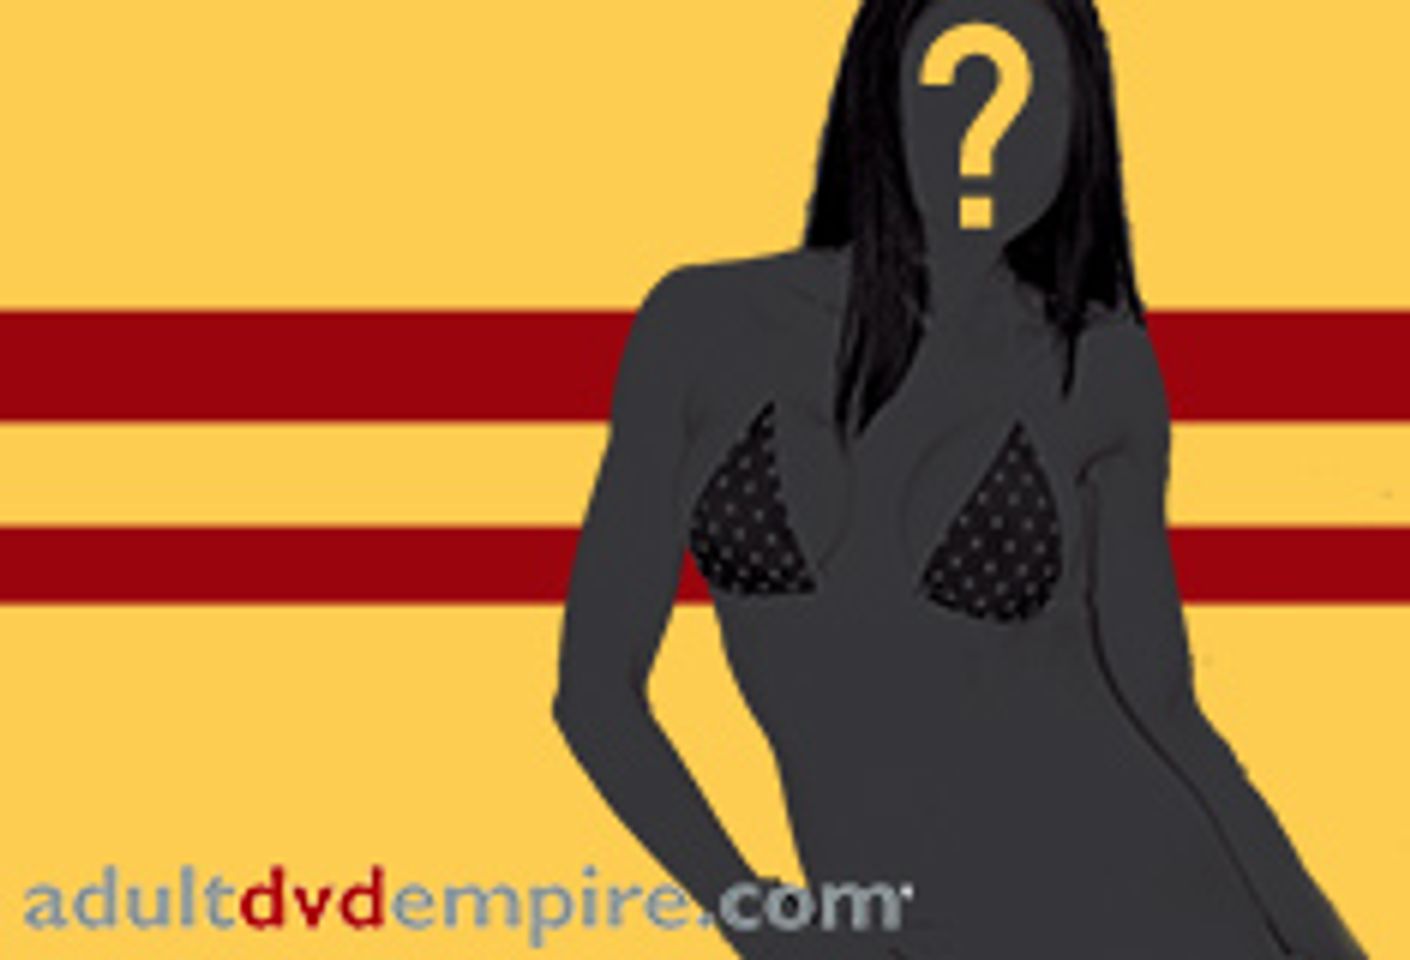 Adult DVD Empire, LA Direct Models Launch 2008 Empire Girl Contest